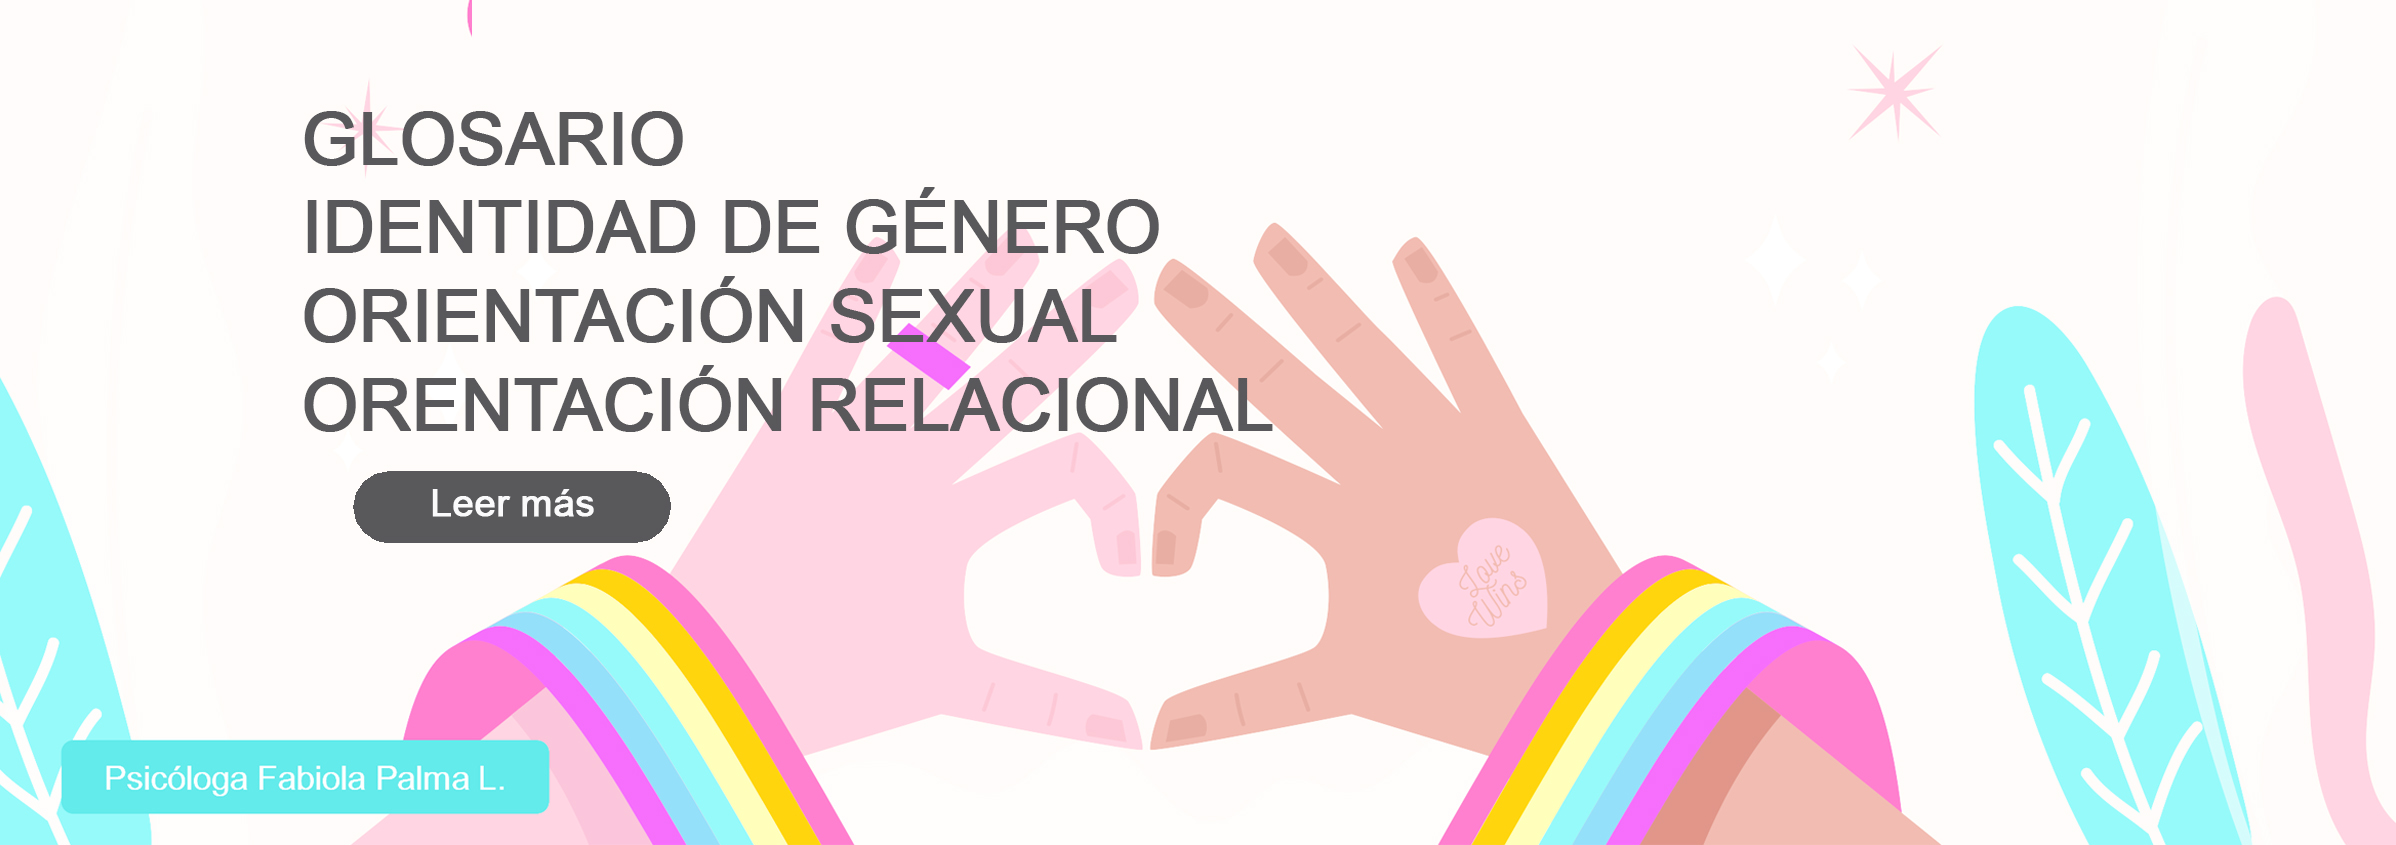 http://www.centrodesexualidad.cl/wp-content/uploads/2021/08/Glosario-LGBTIQ-CCHS-Psicologa-Fabiola-Palma-L.-1.jpg